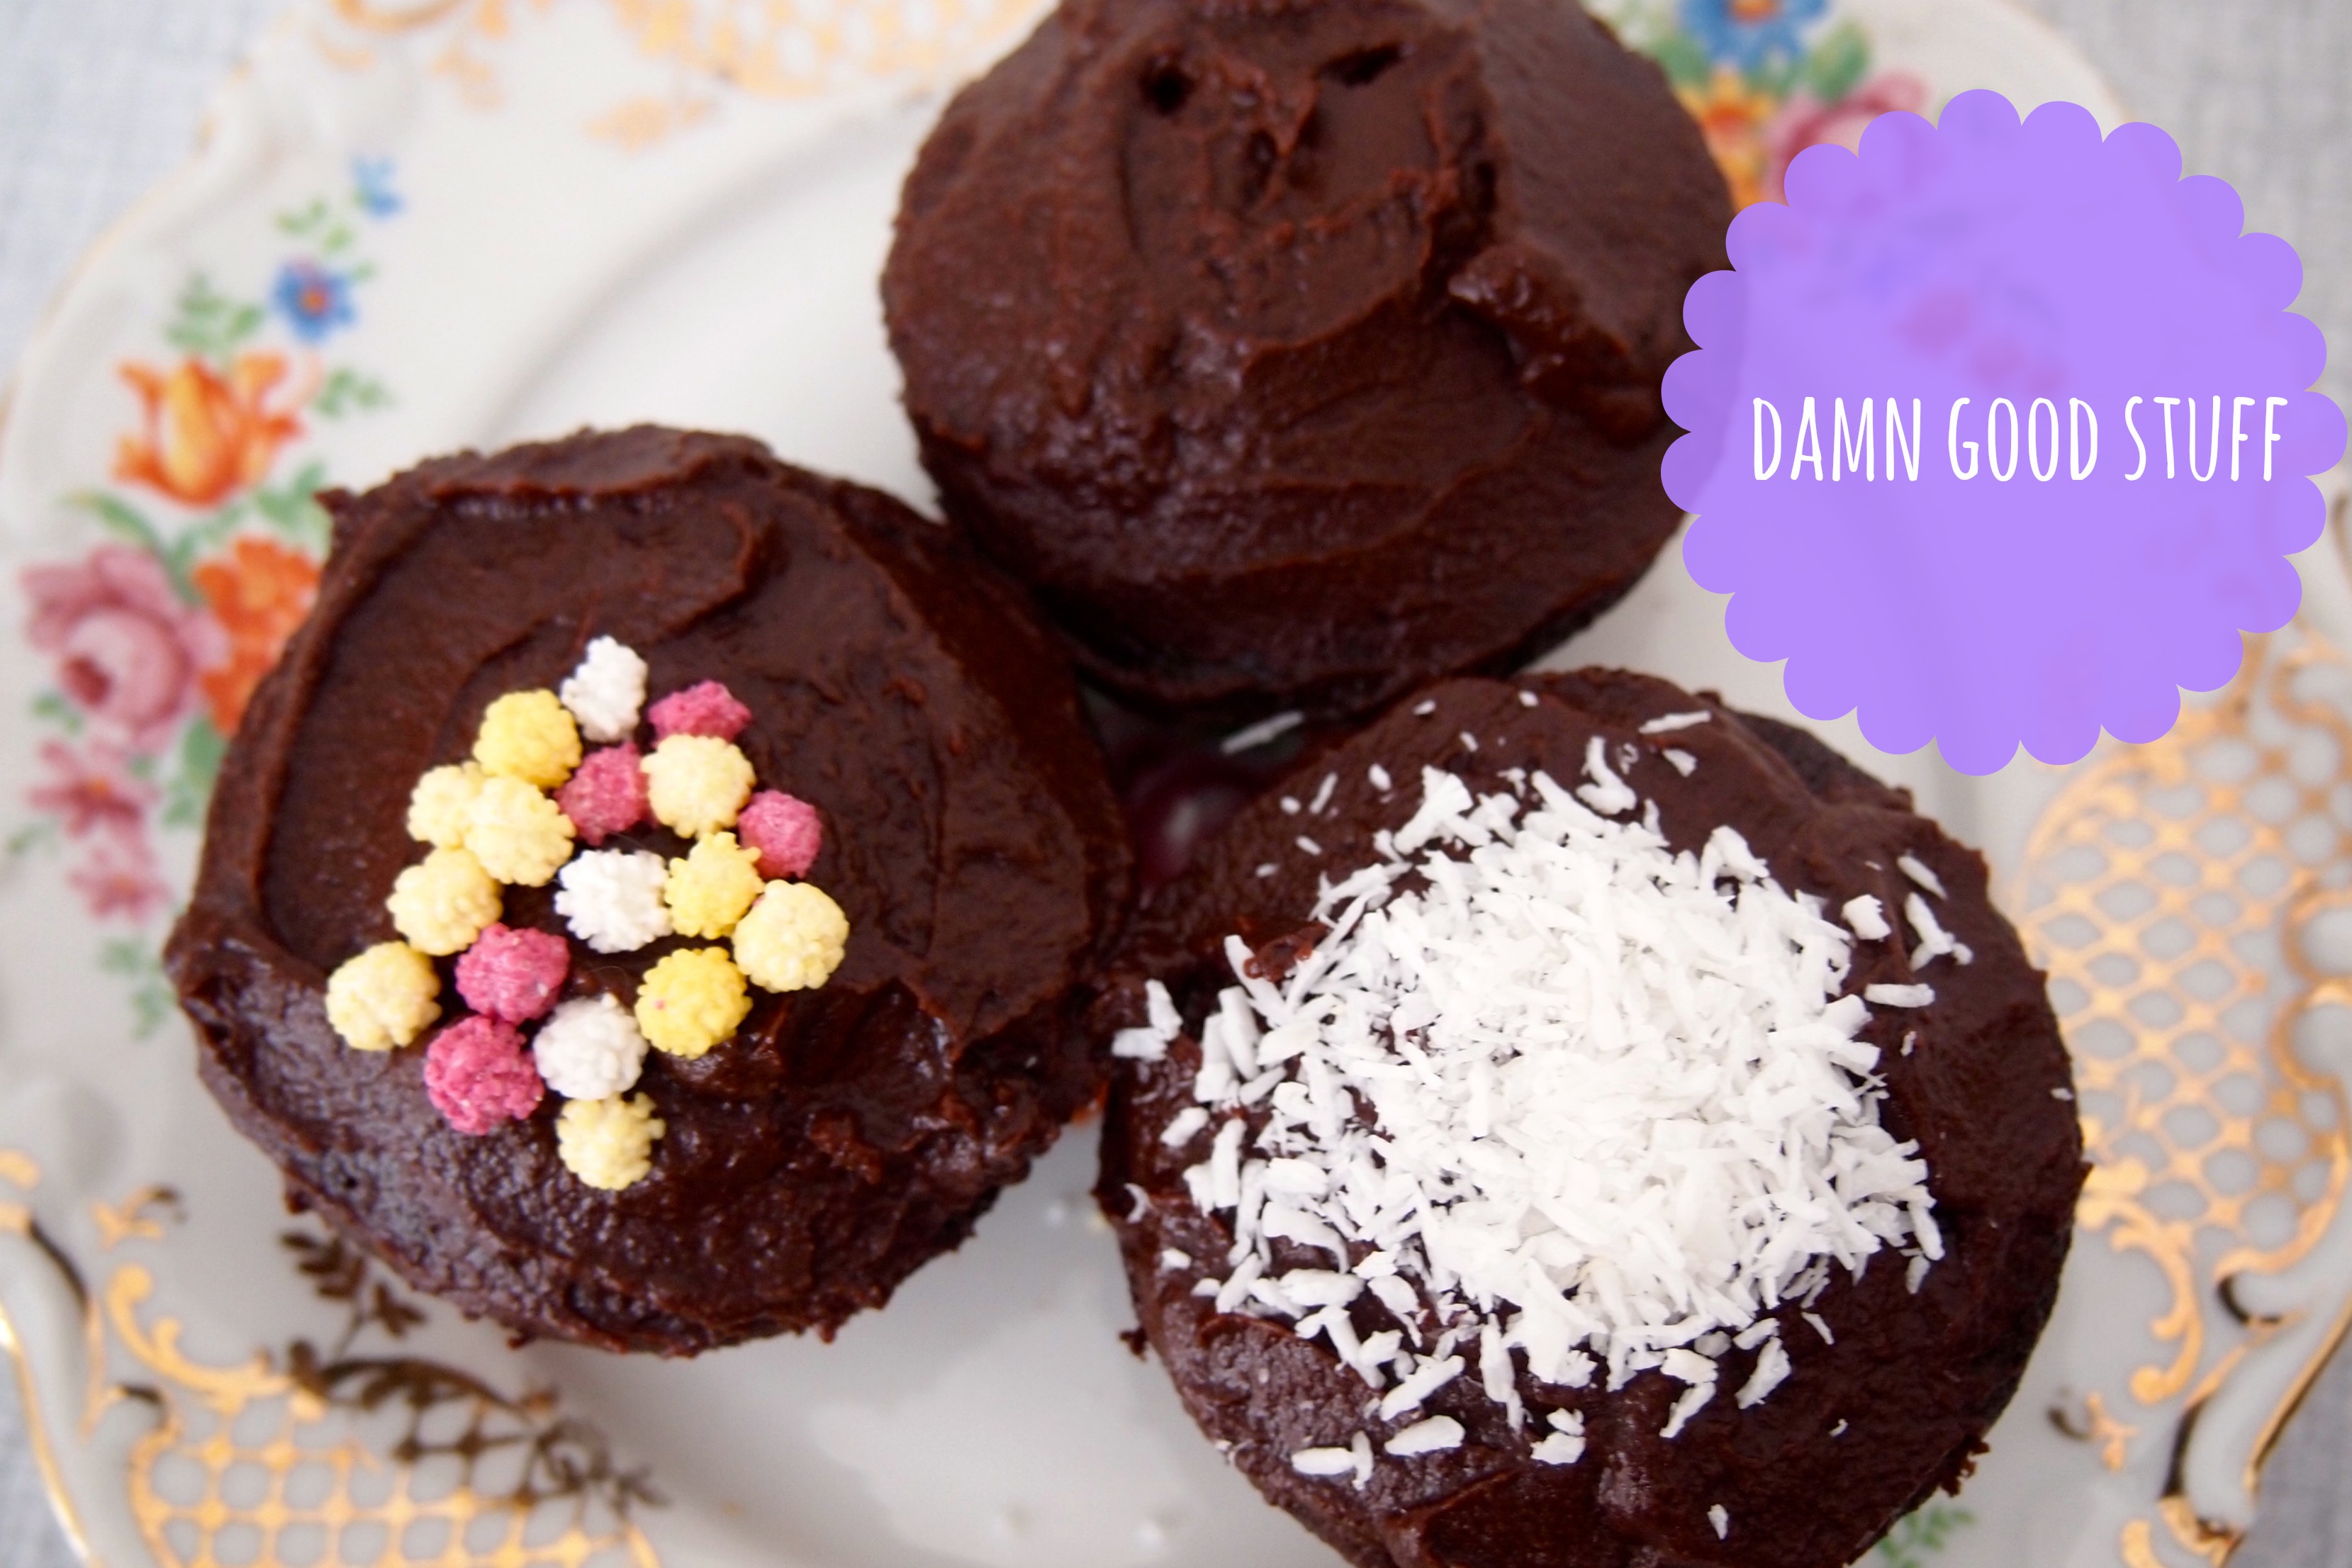 Productie brand Relatief Triple Chocolate Cupcakes | De Groene Meisjes